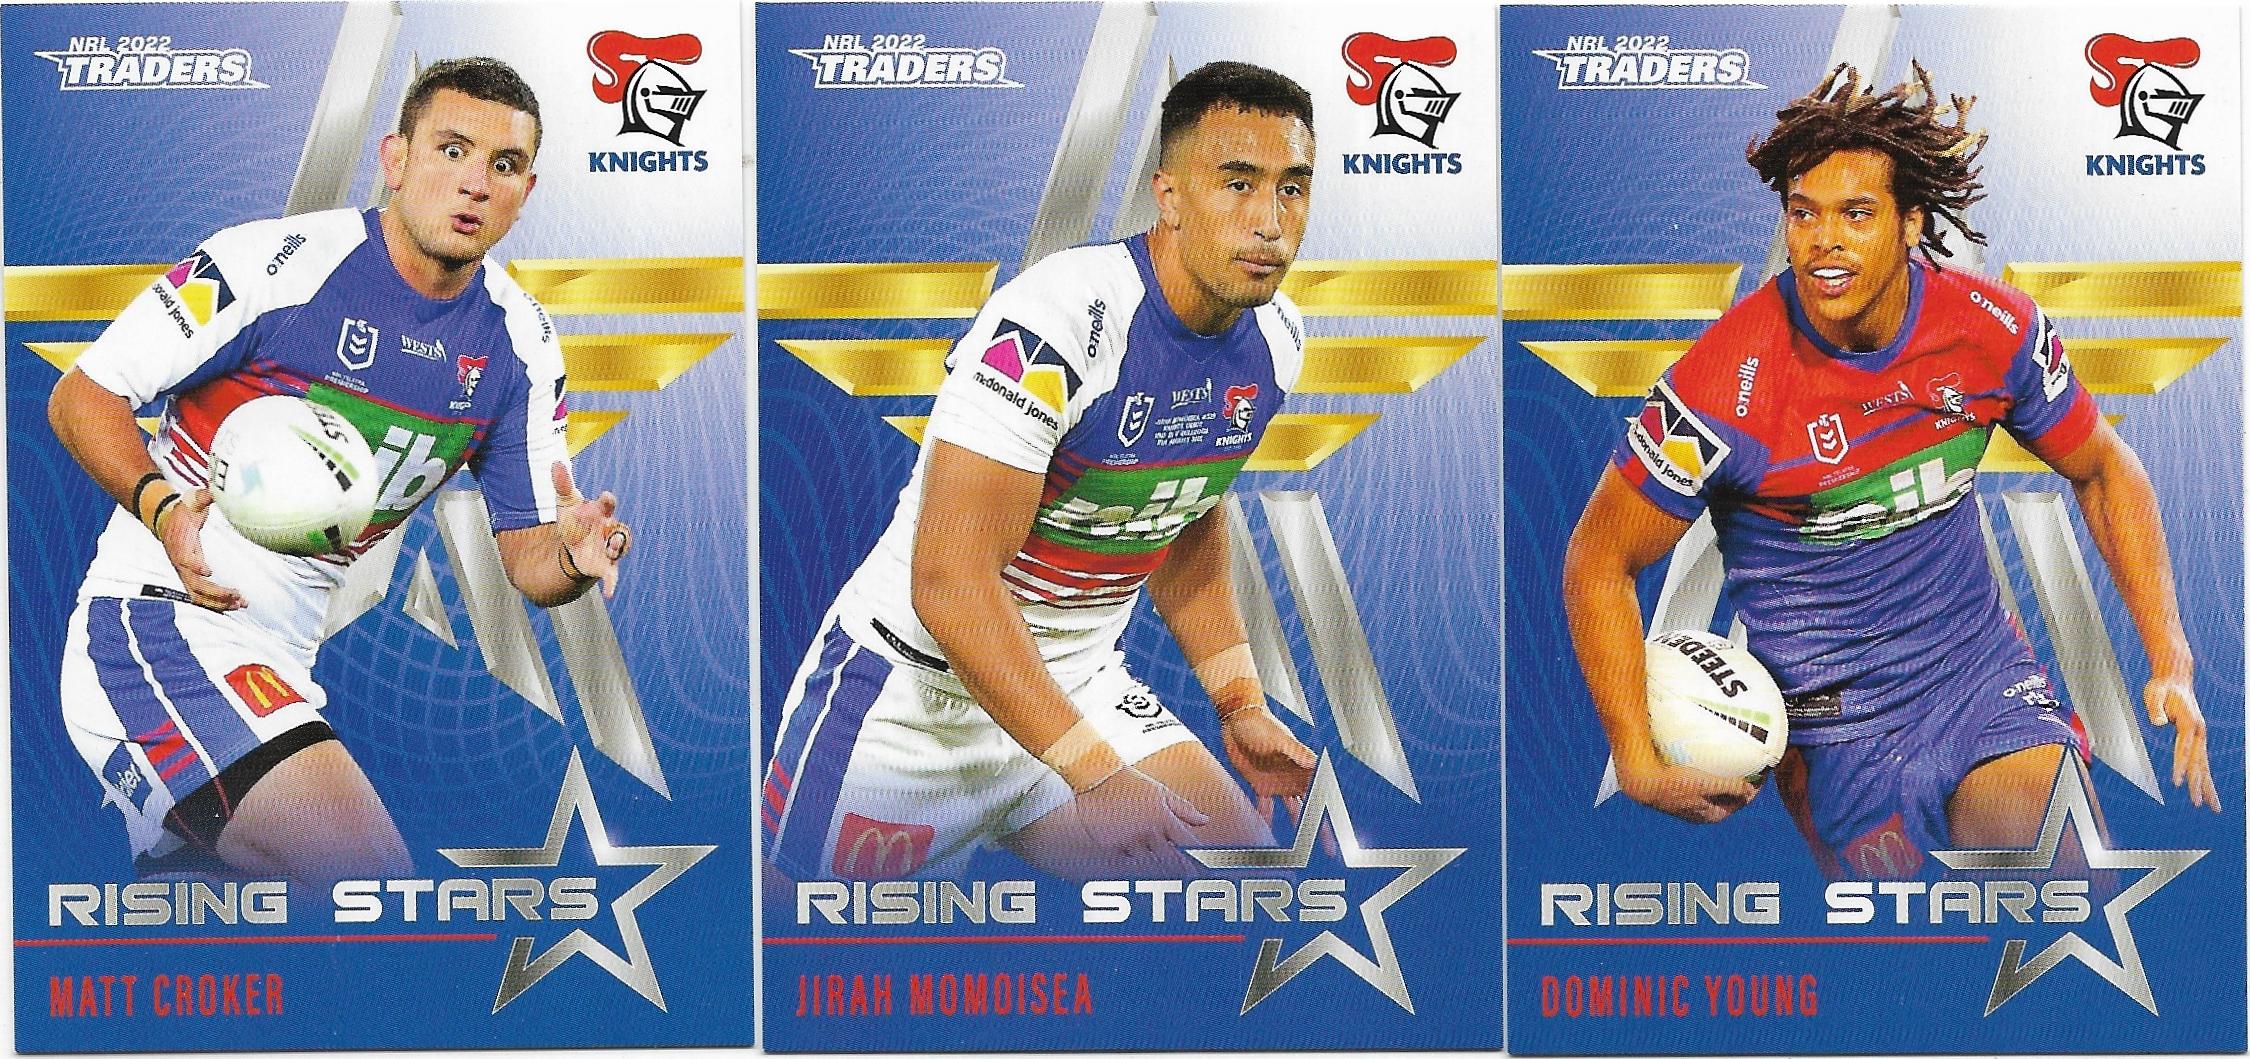 2022 Nrl Traders Rising Stars 3 Card Team Set – Knights